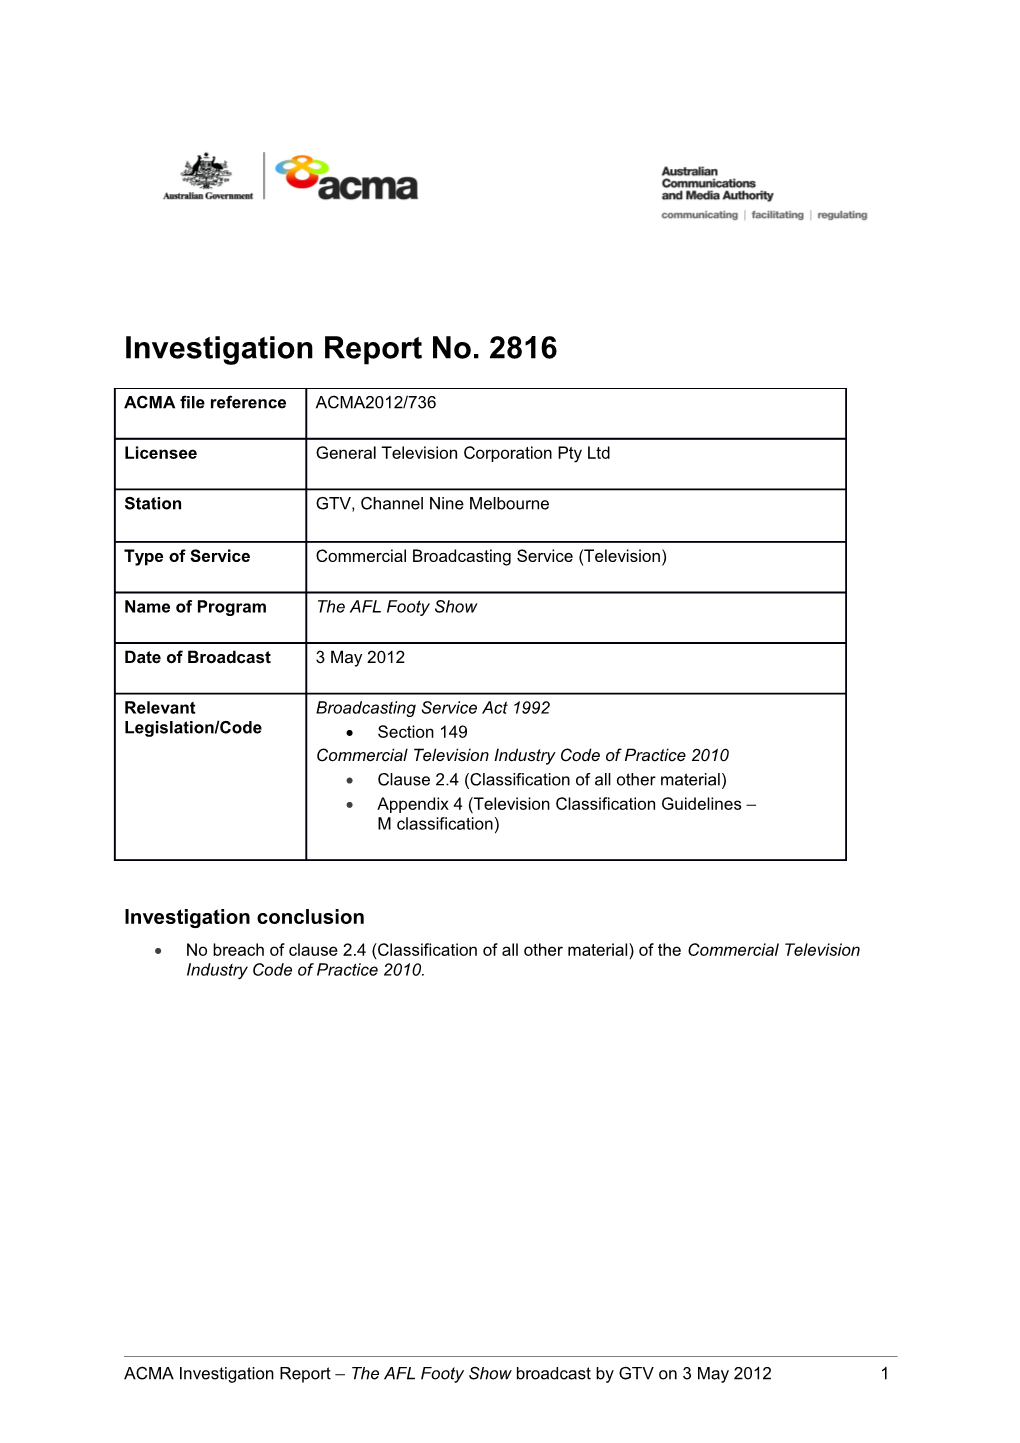 GTV Melbourne - ACMA Investigation Report 2816